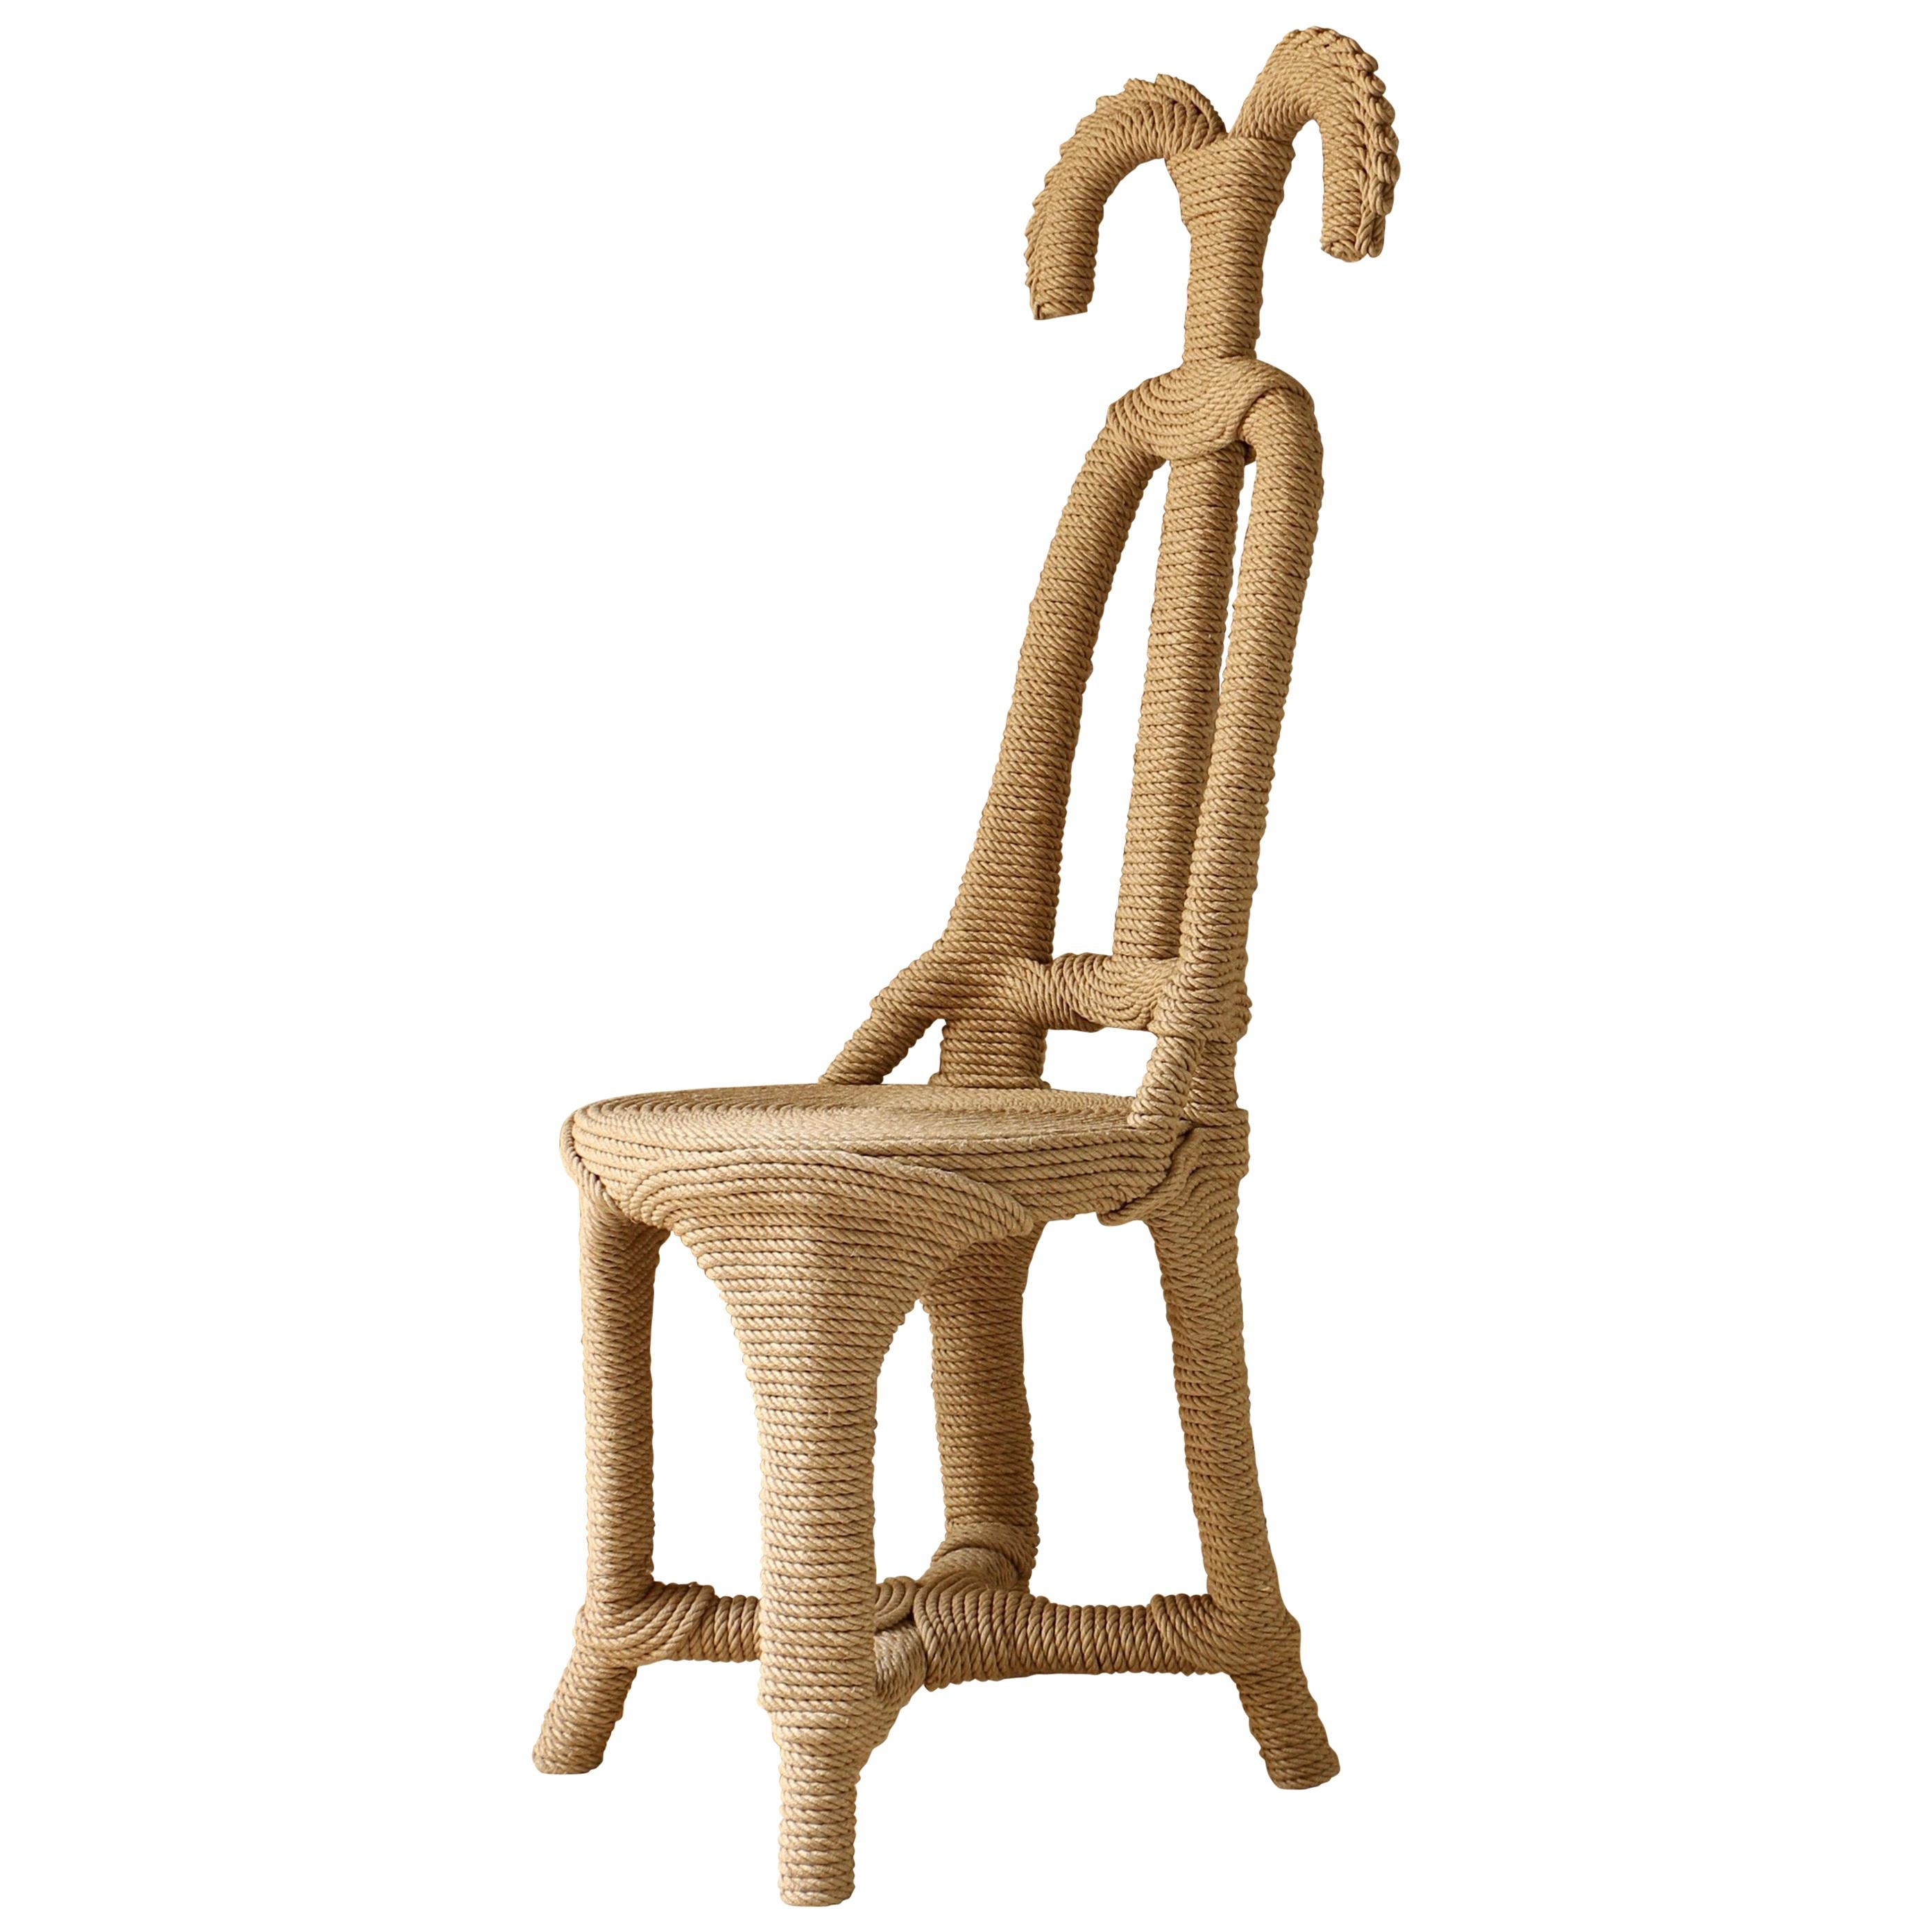 Moiste Chair by Christian Astuguevieille